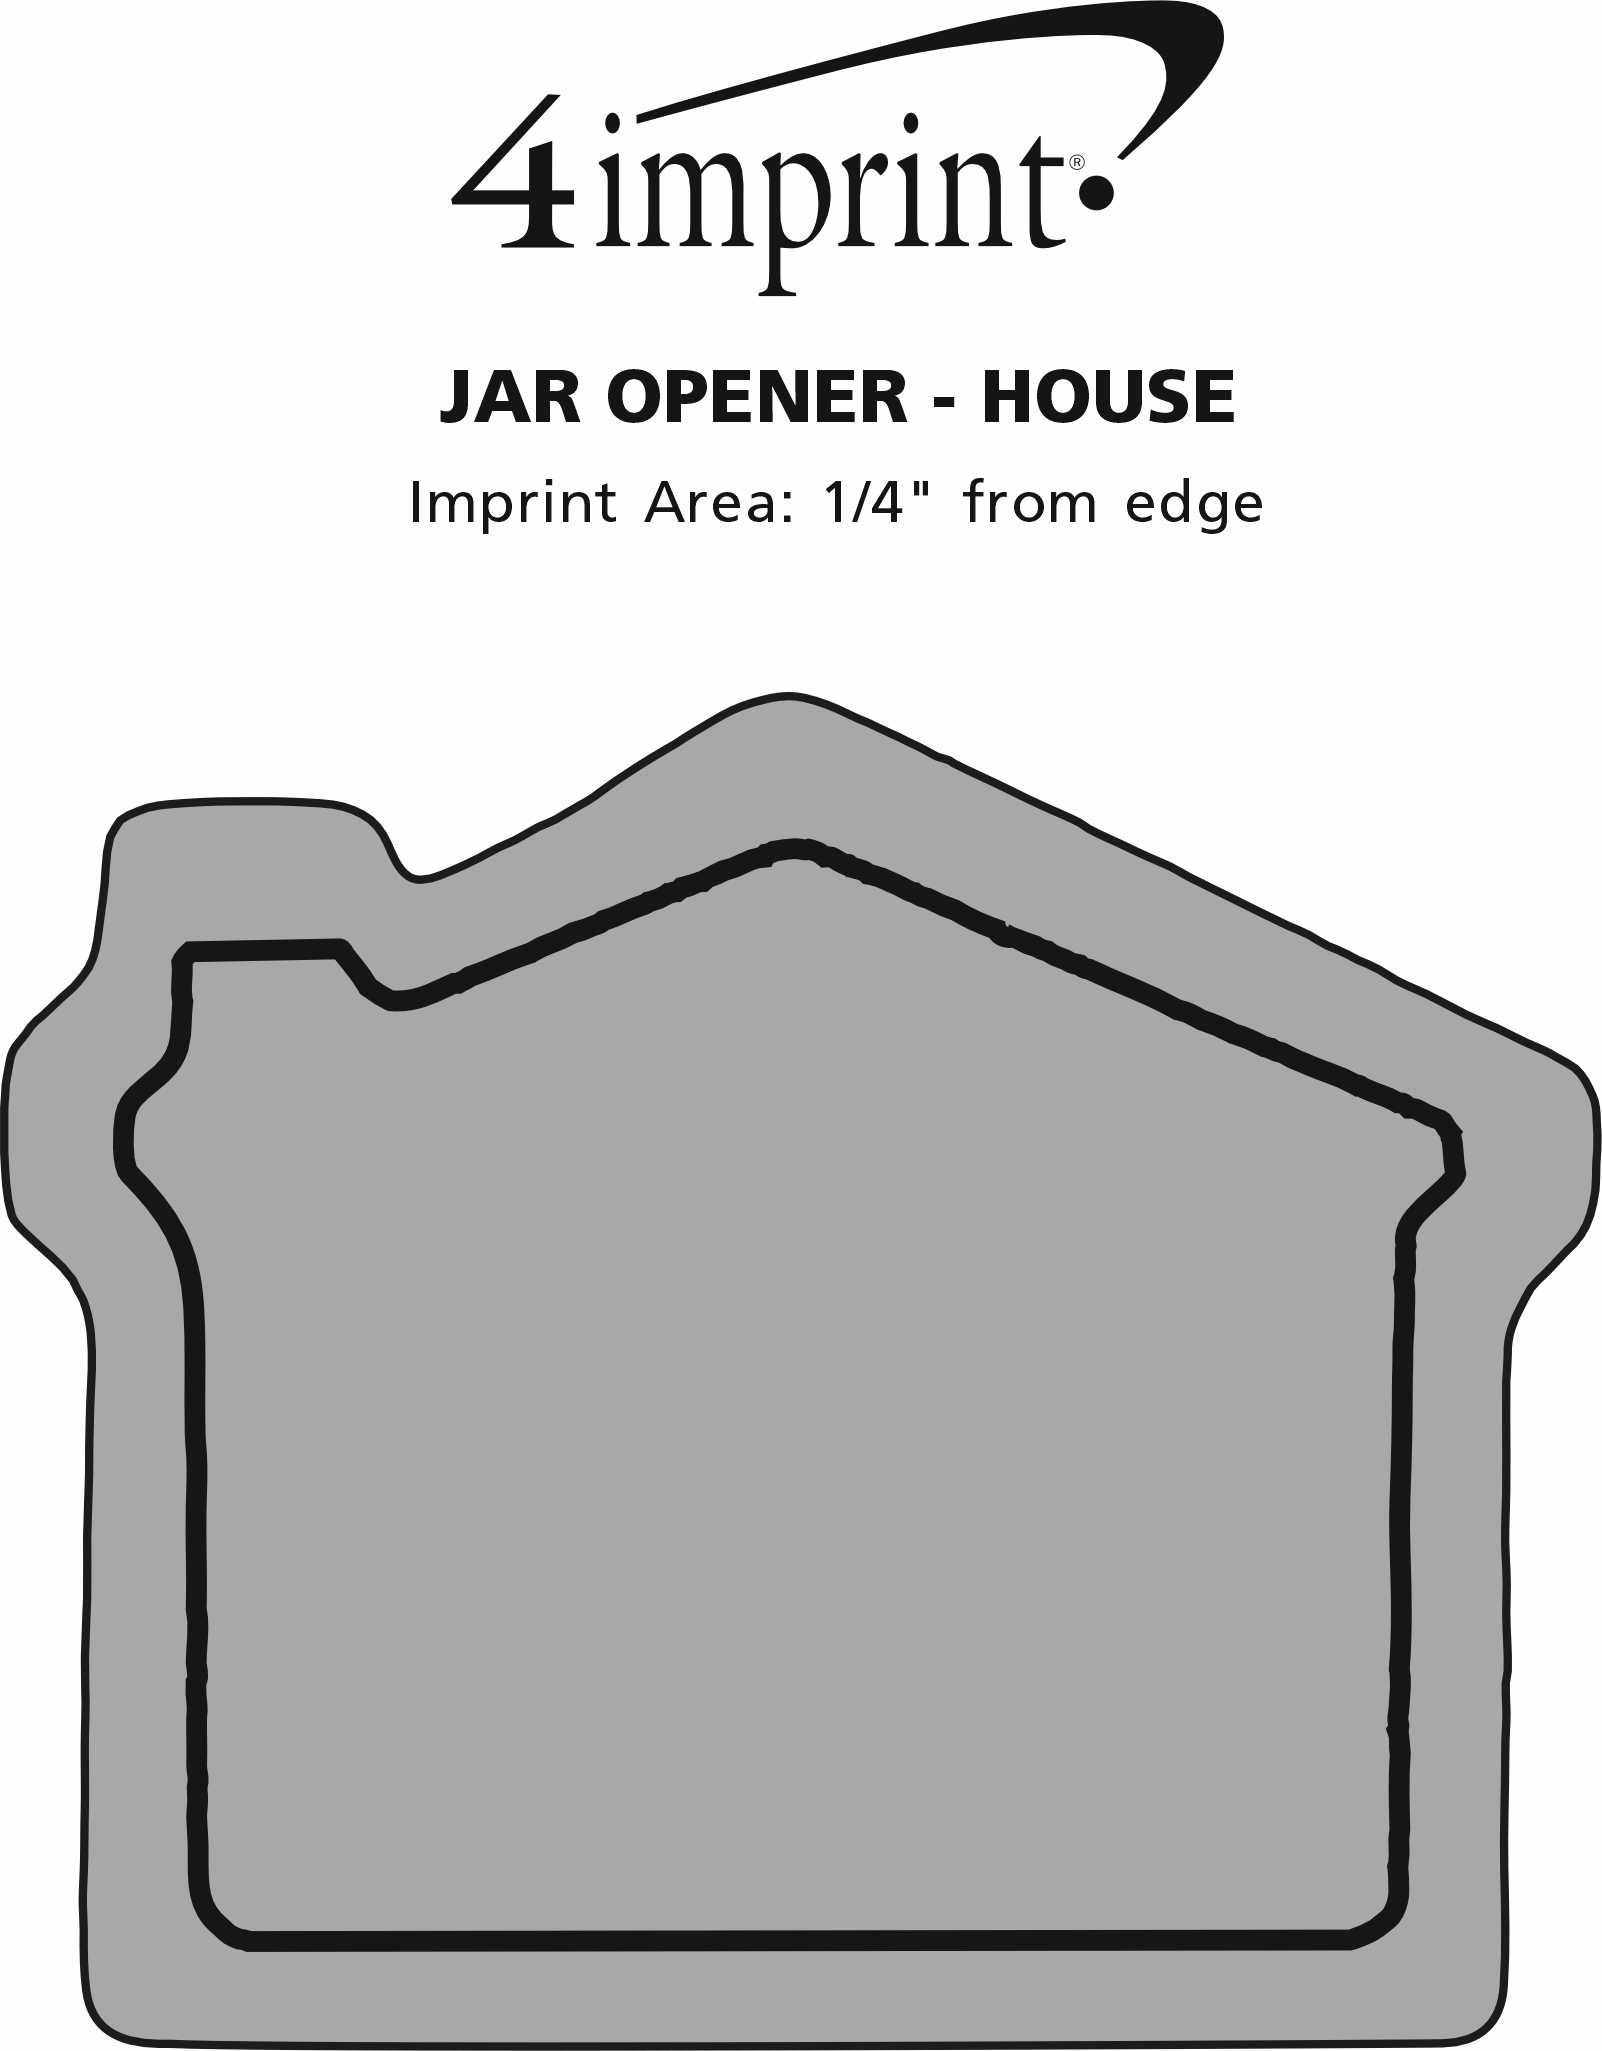 Imprint Area of Jar Opener - House